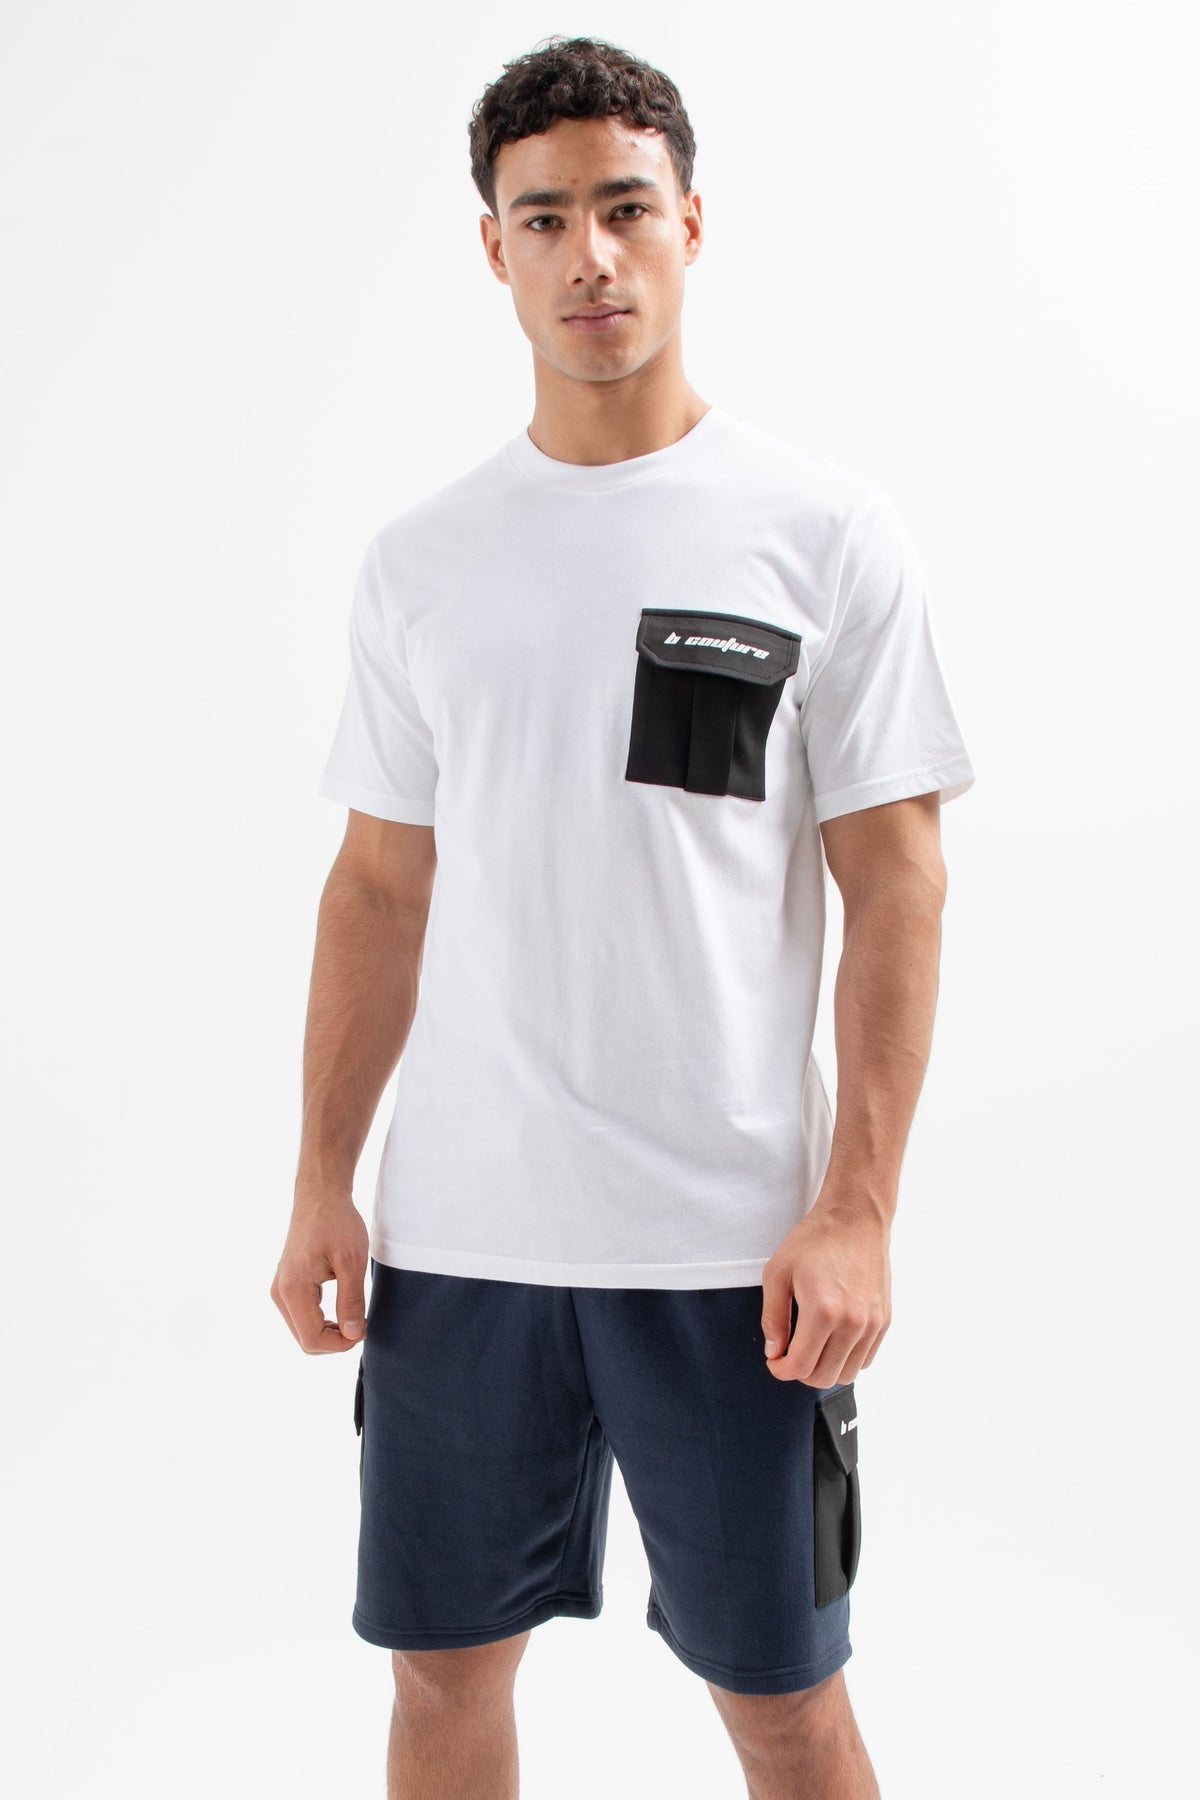 Petersham T-Shirt & Short Set - White/Navy